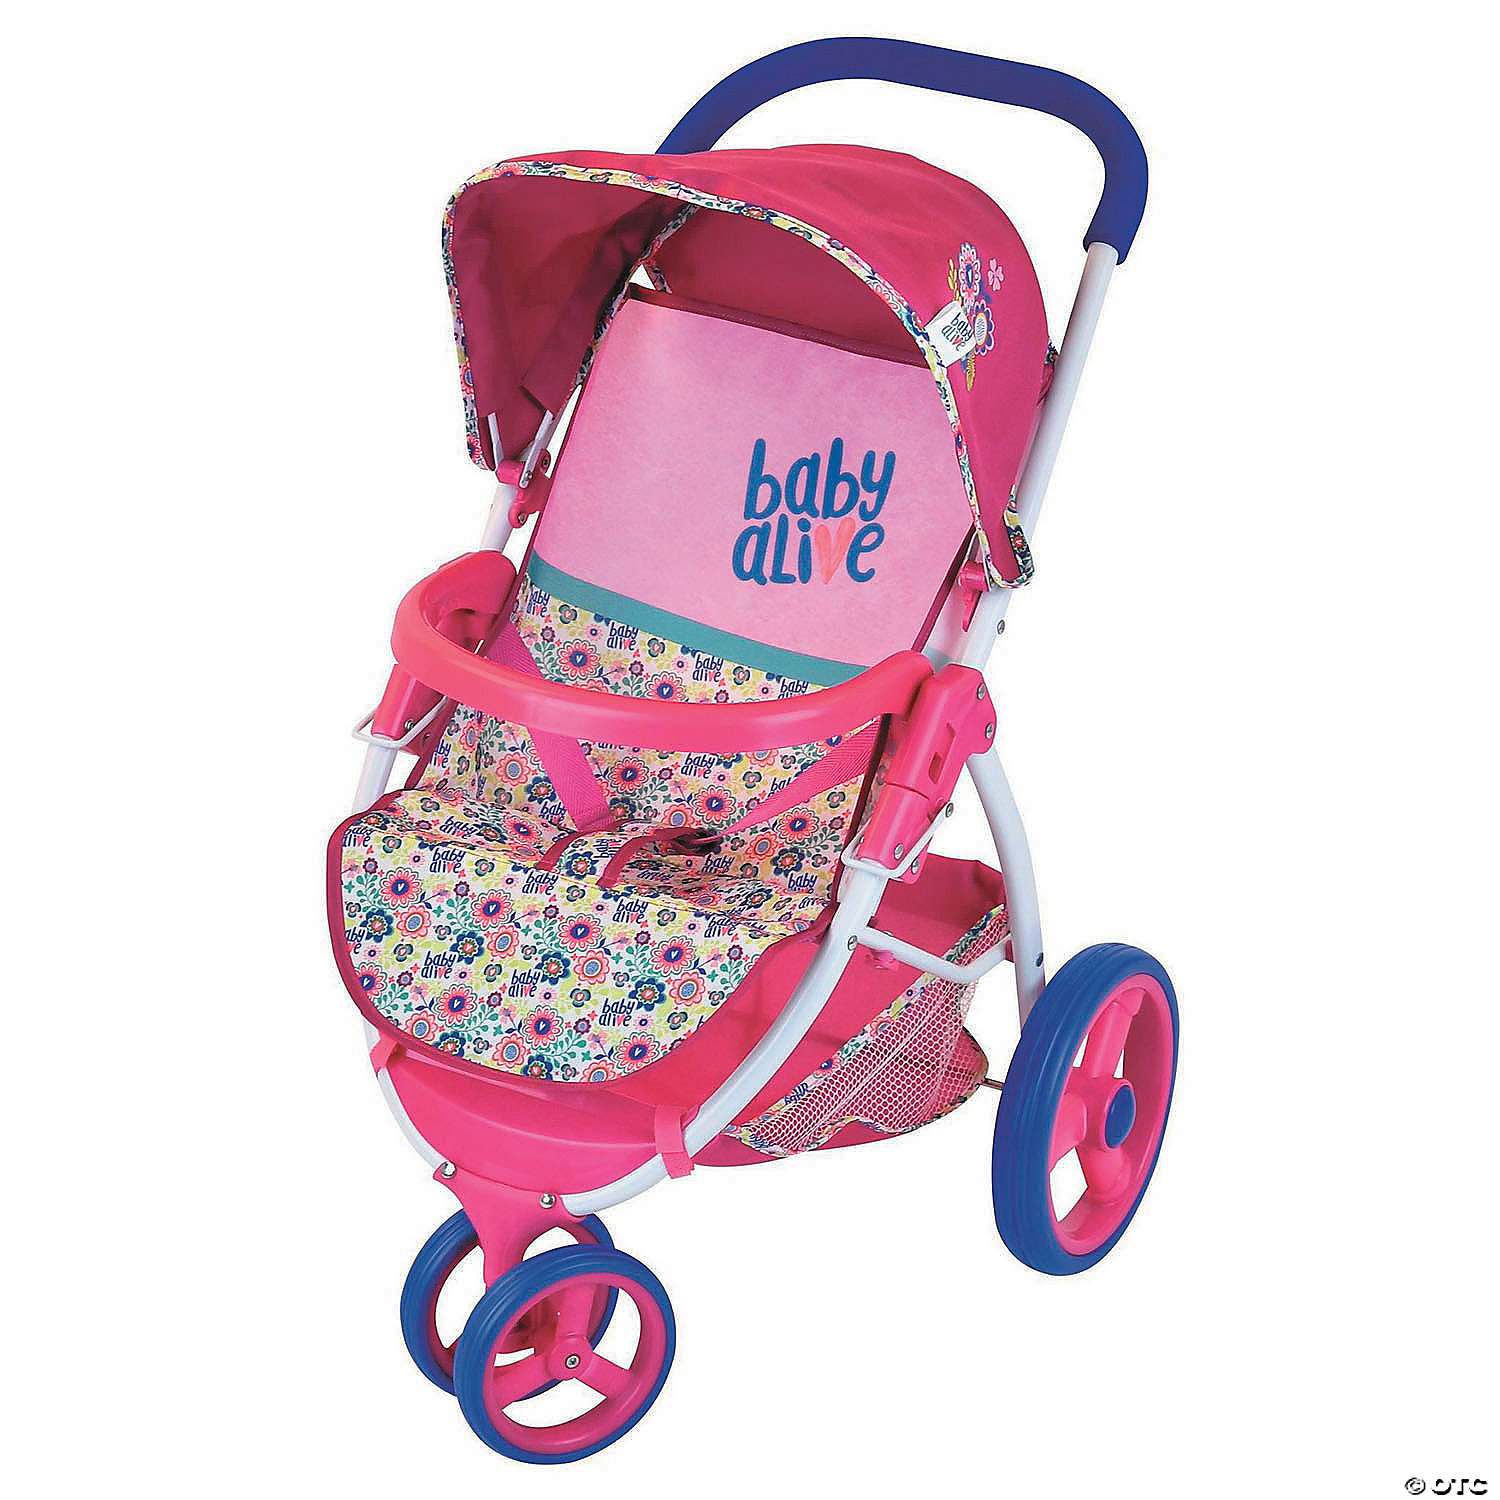 light pink stroller